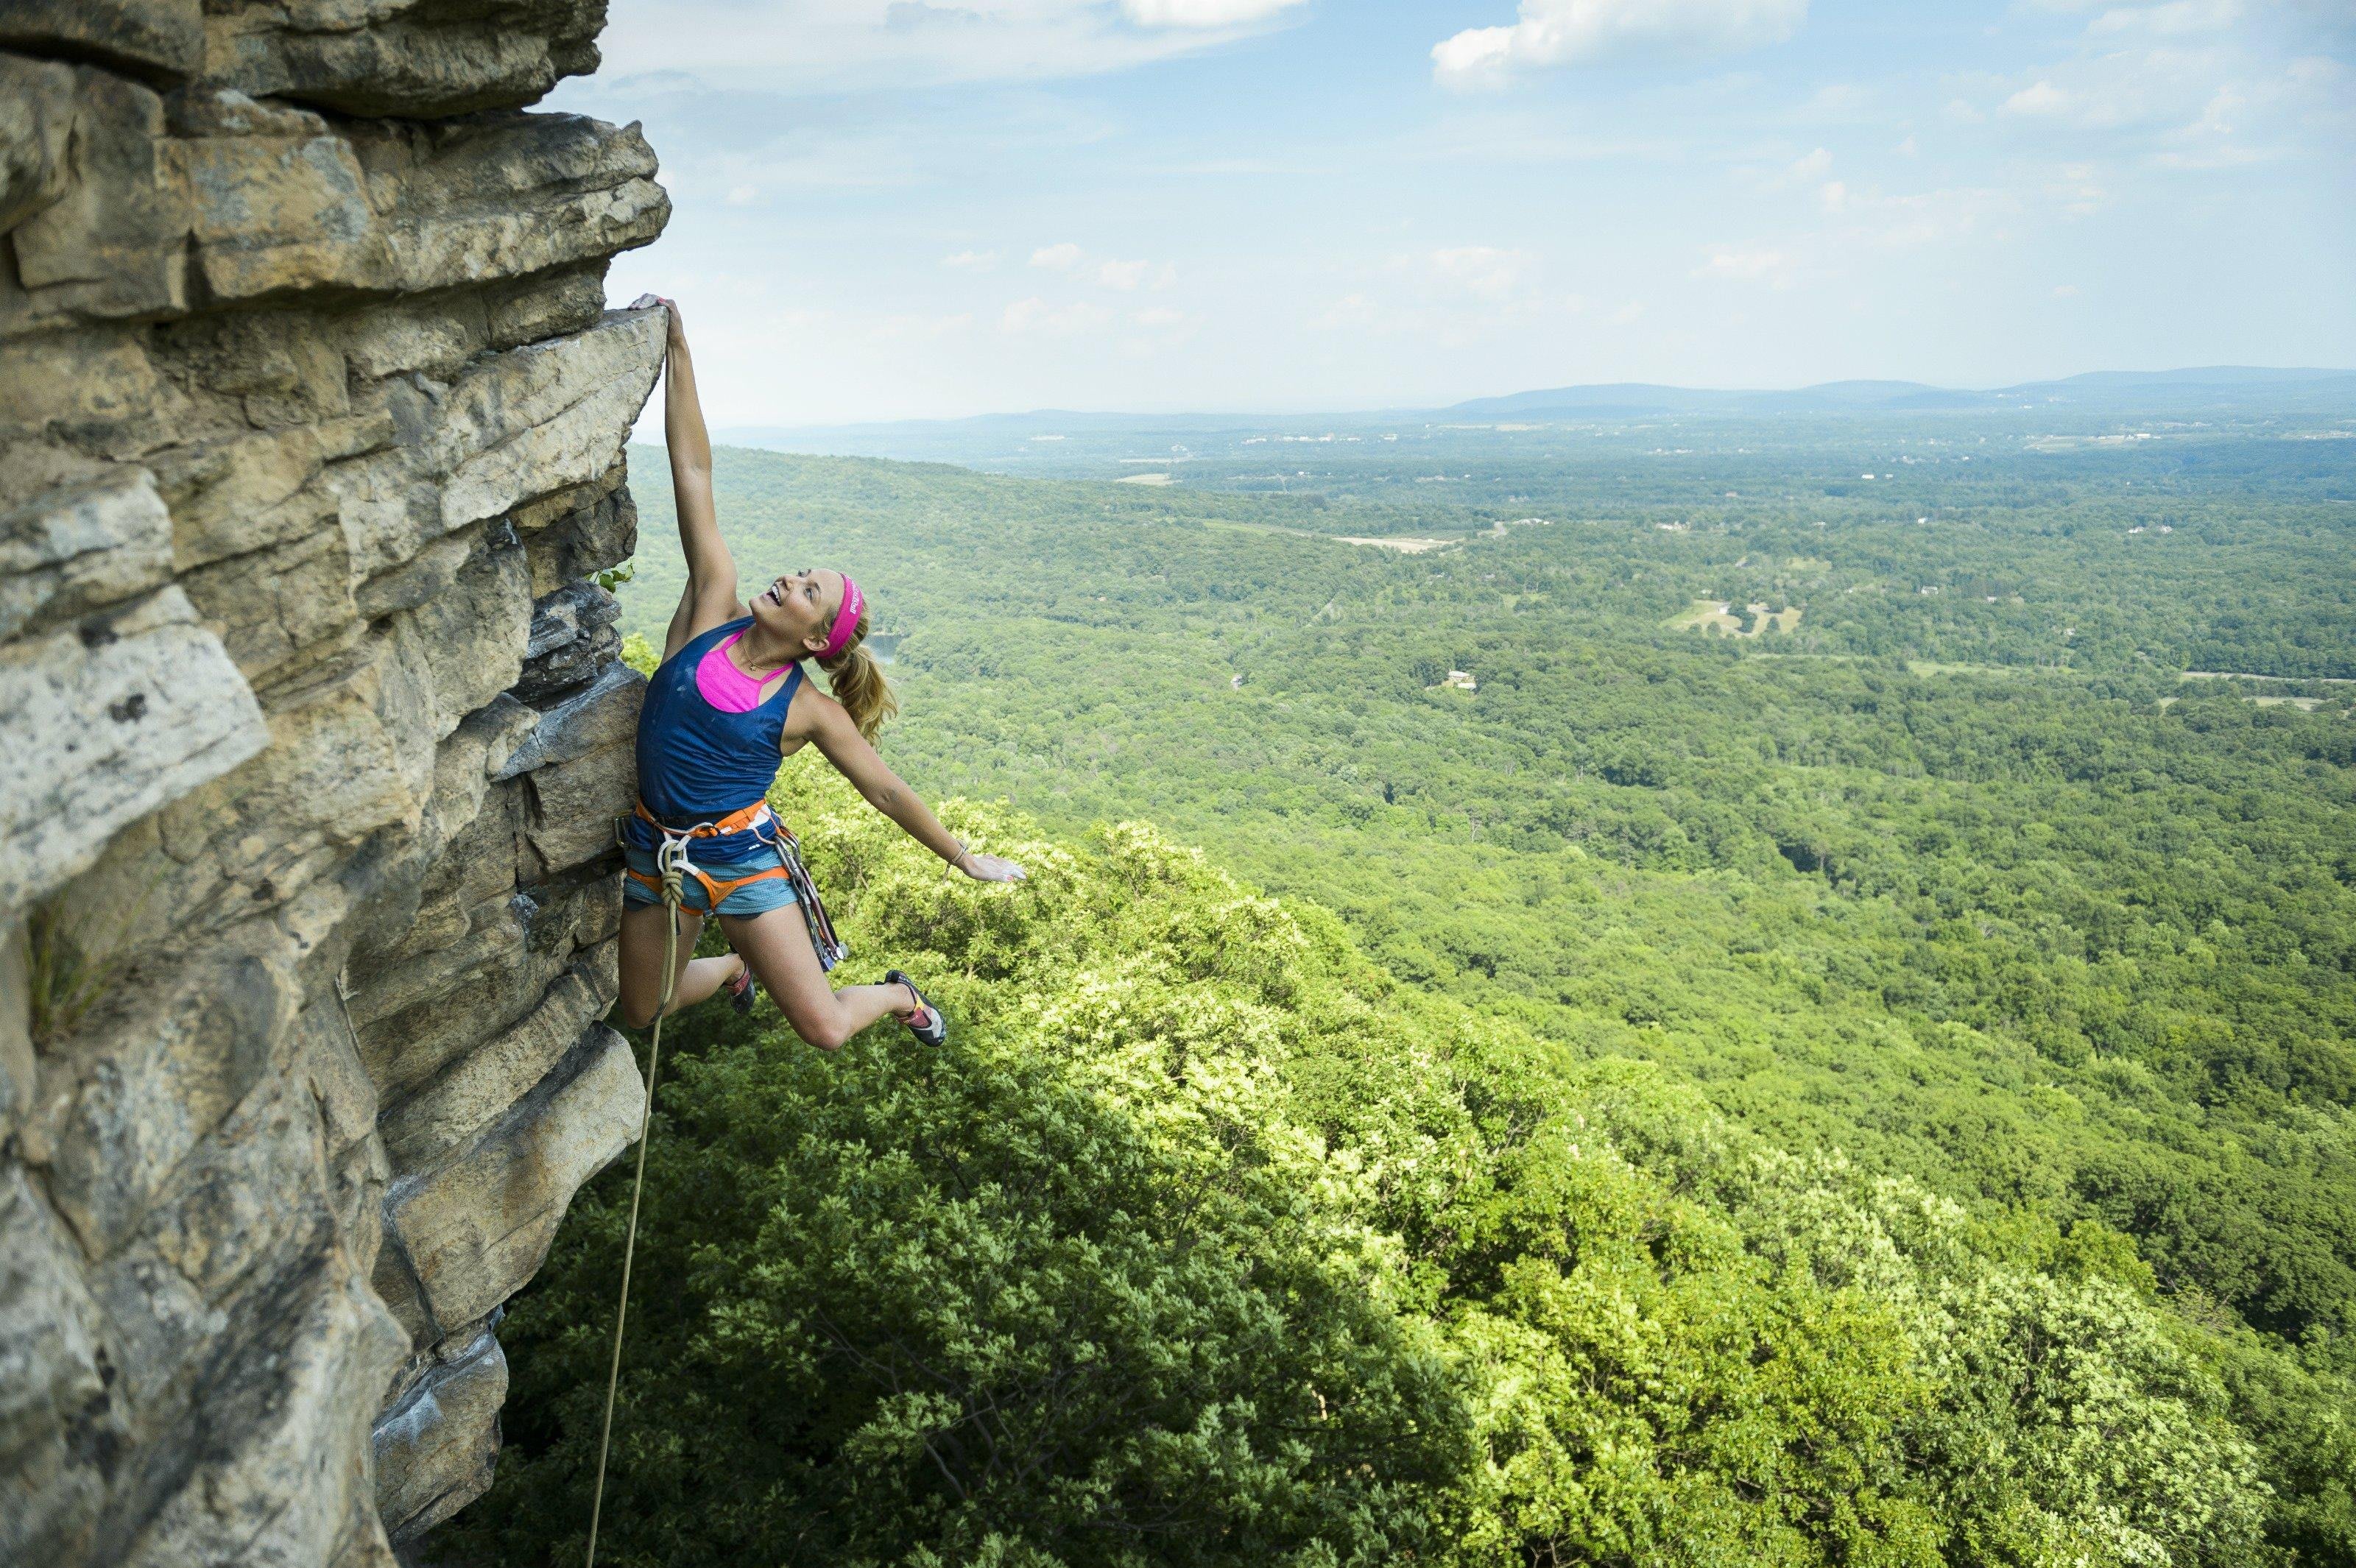 La climber statunitense Sasha DiGiulian. 